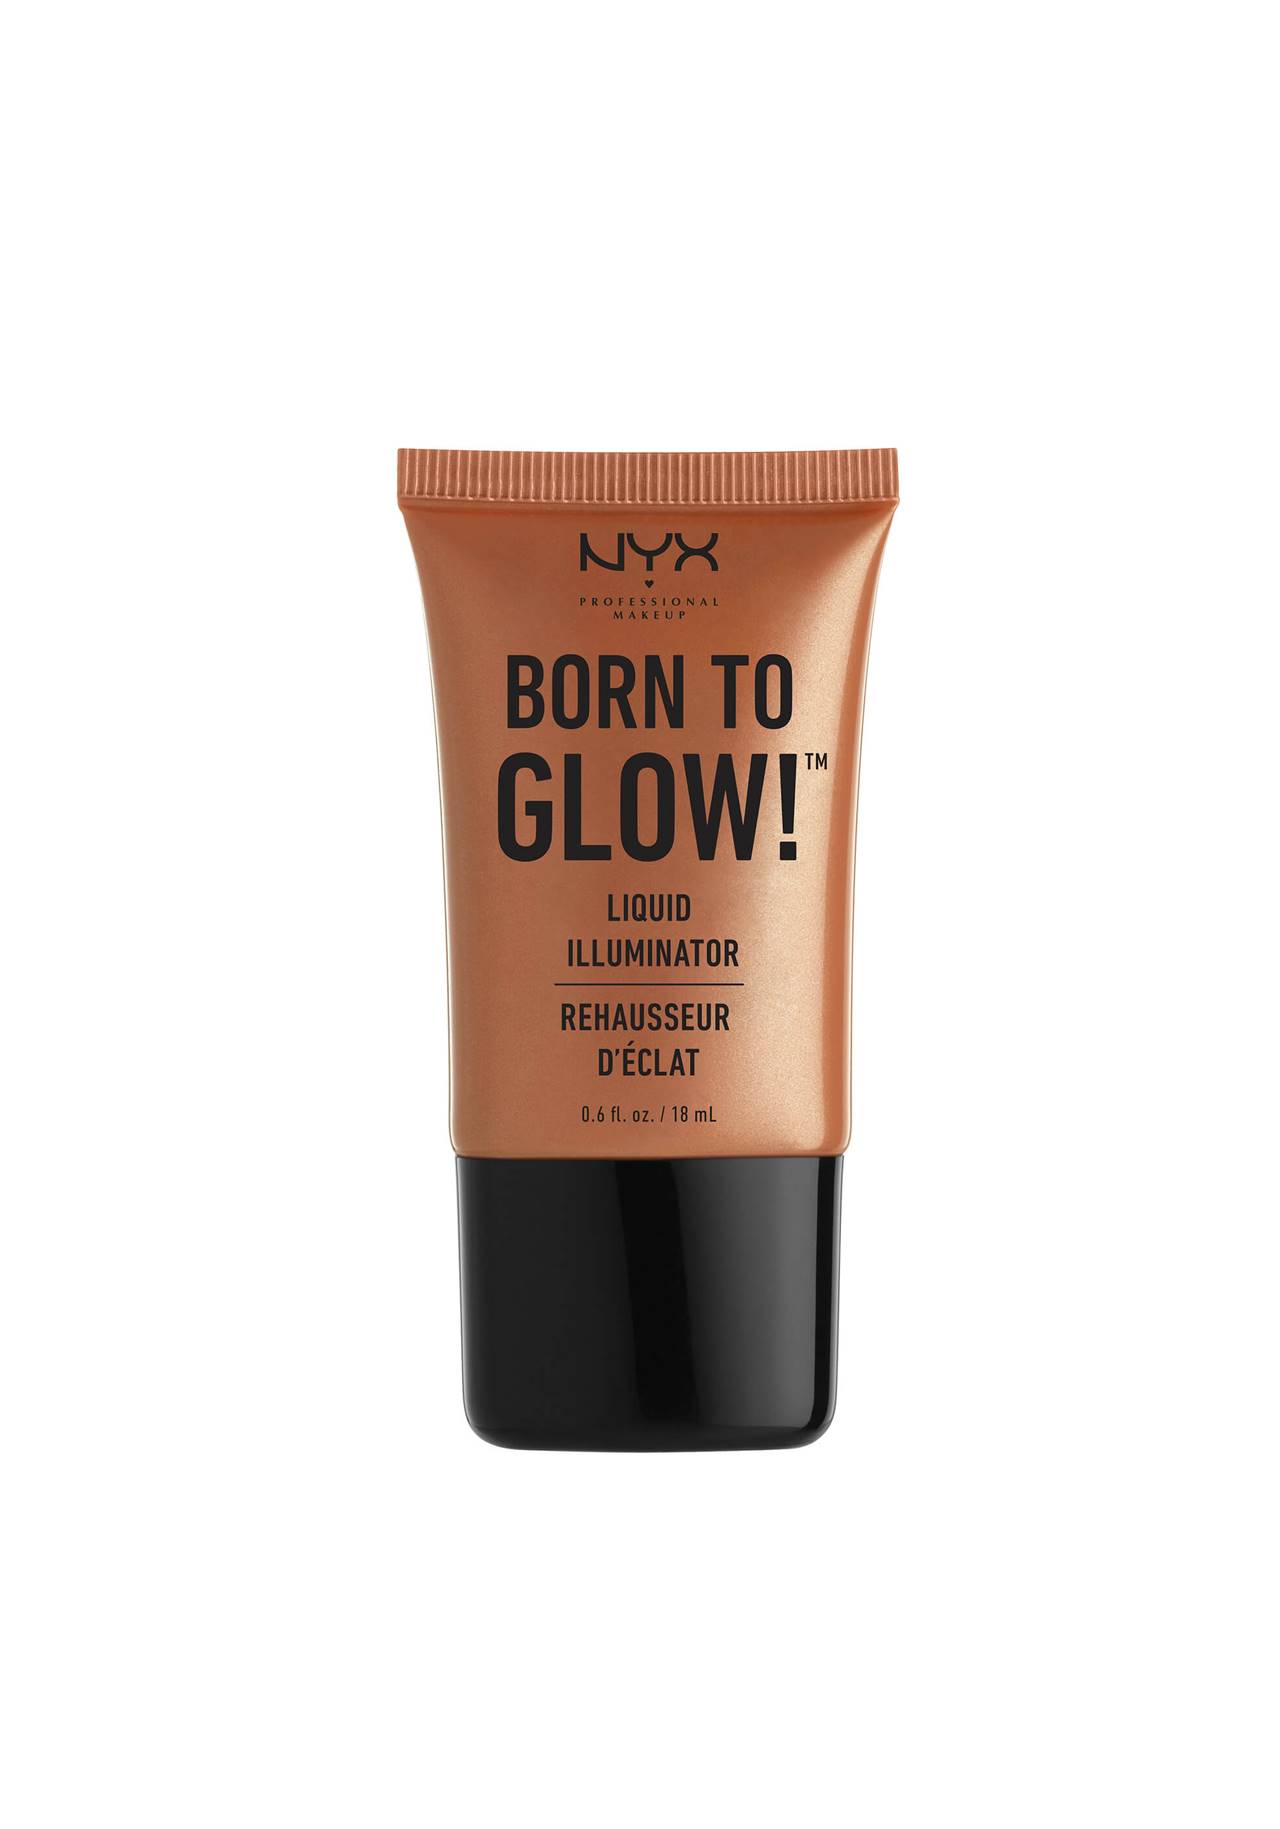 Born to glow! de NYX